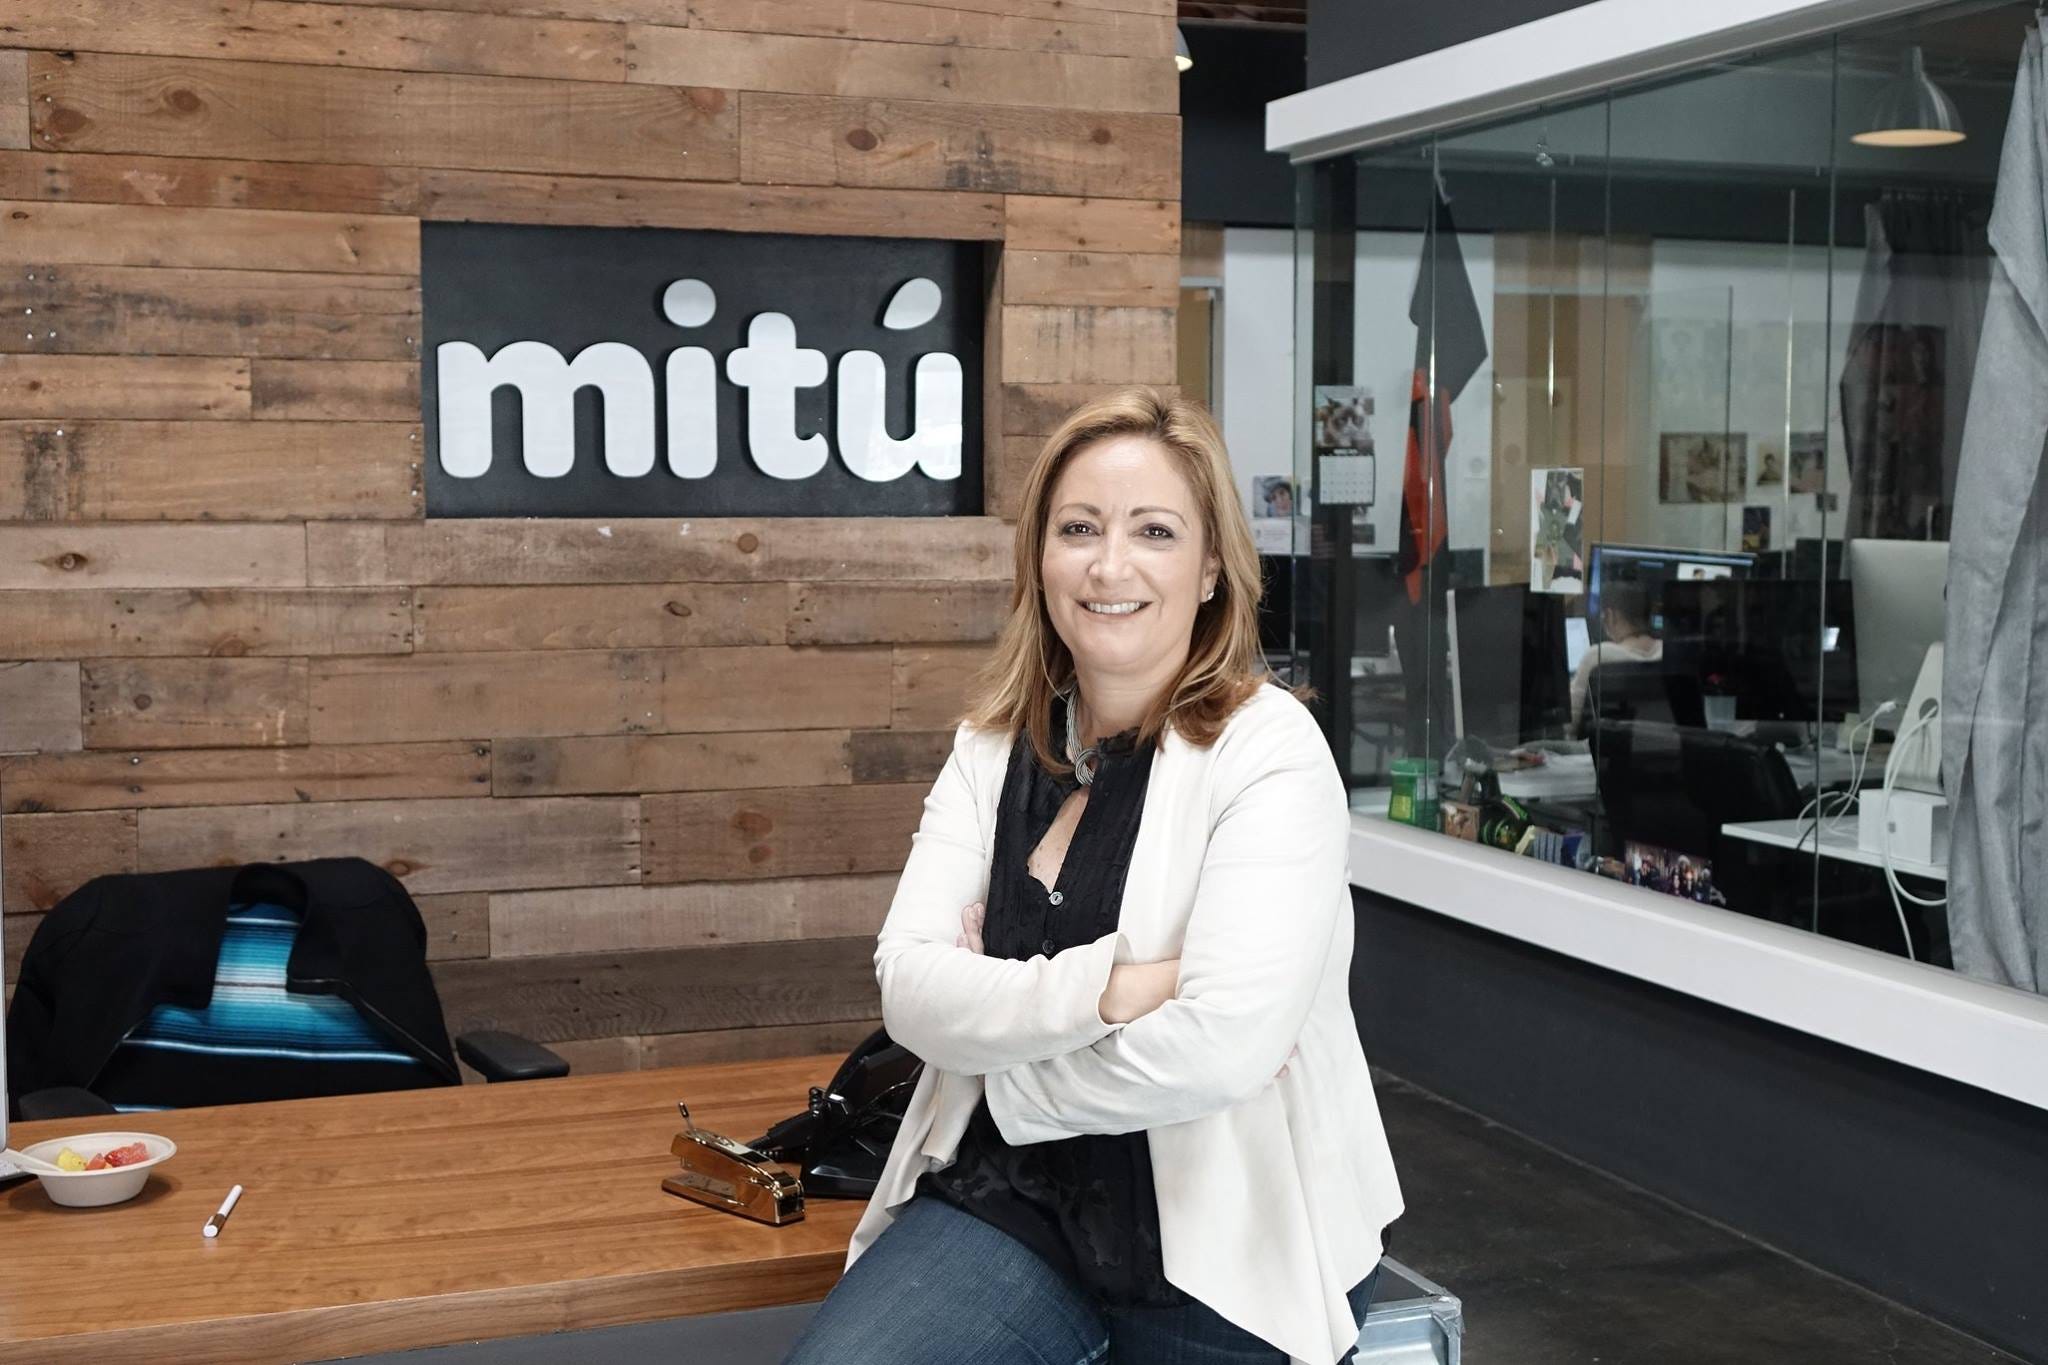 Mitu's focus on Latino youth paying off